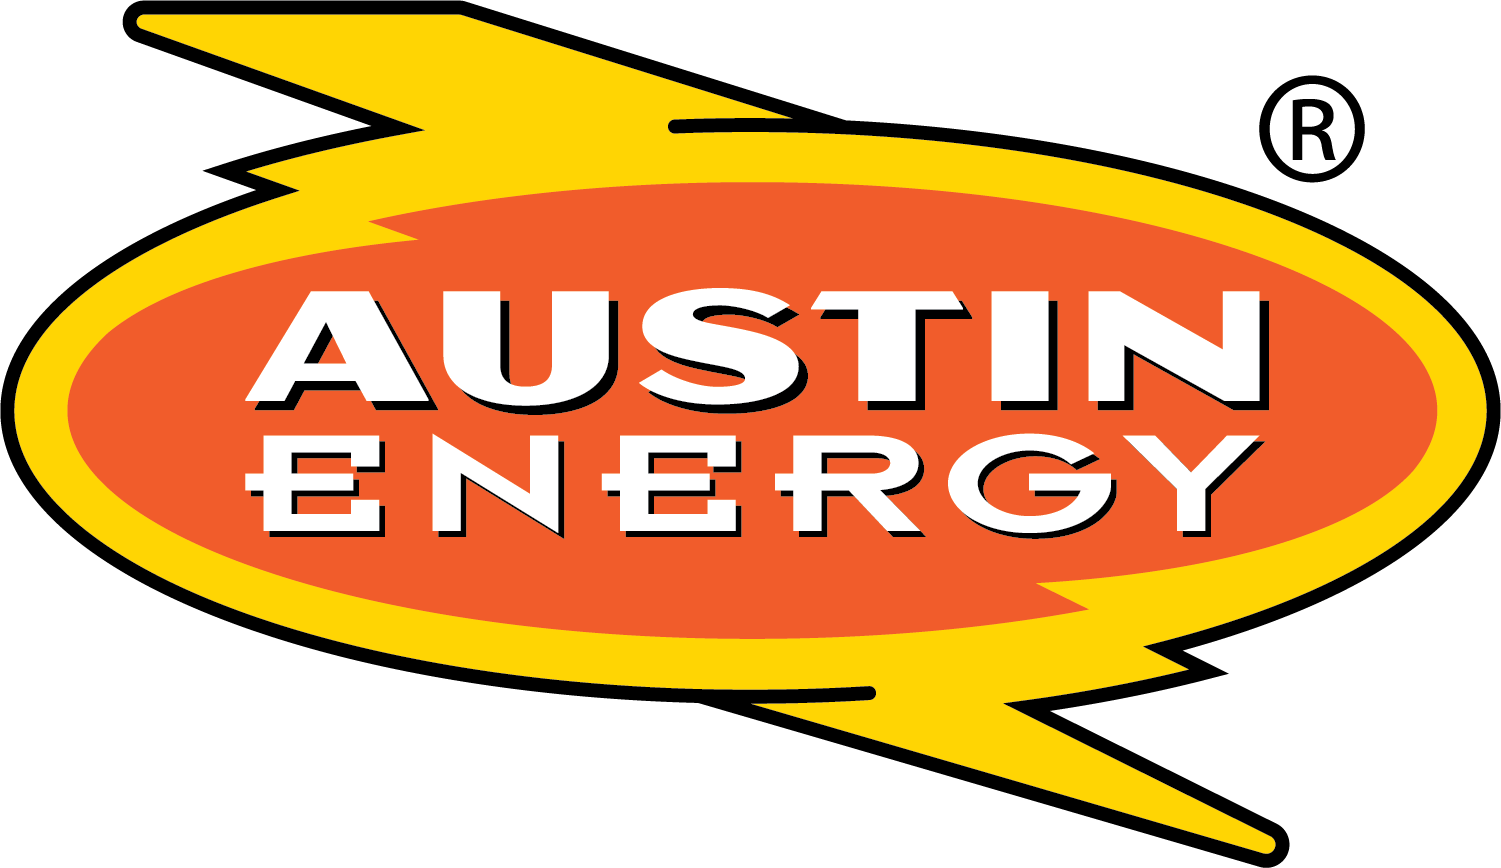 Austin Energy logo